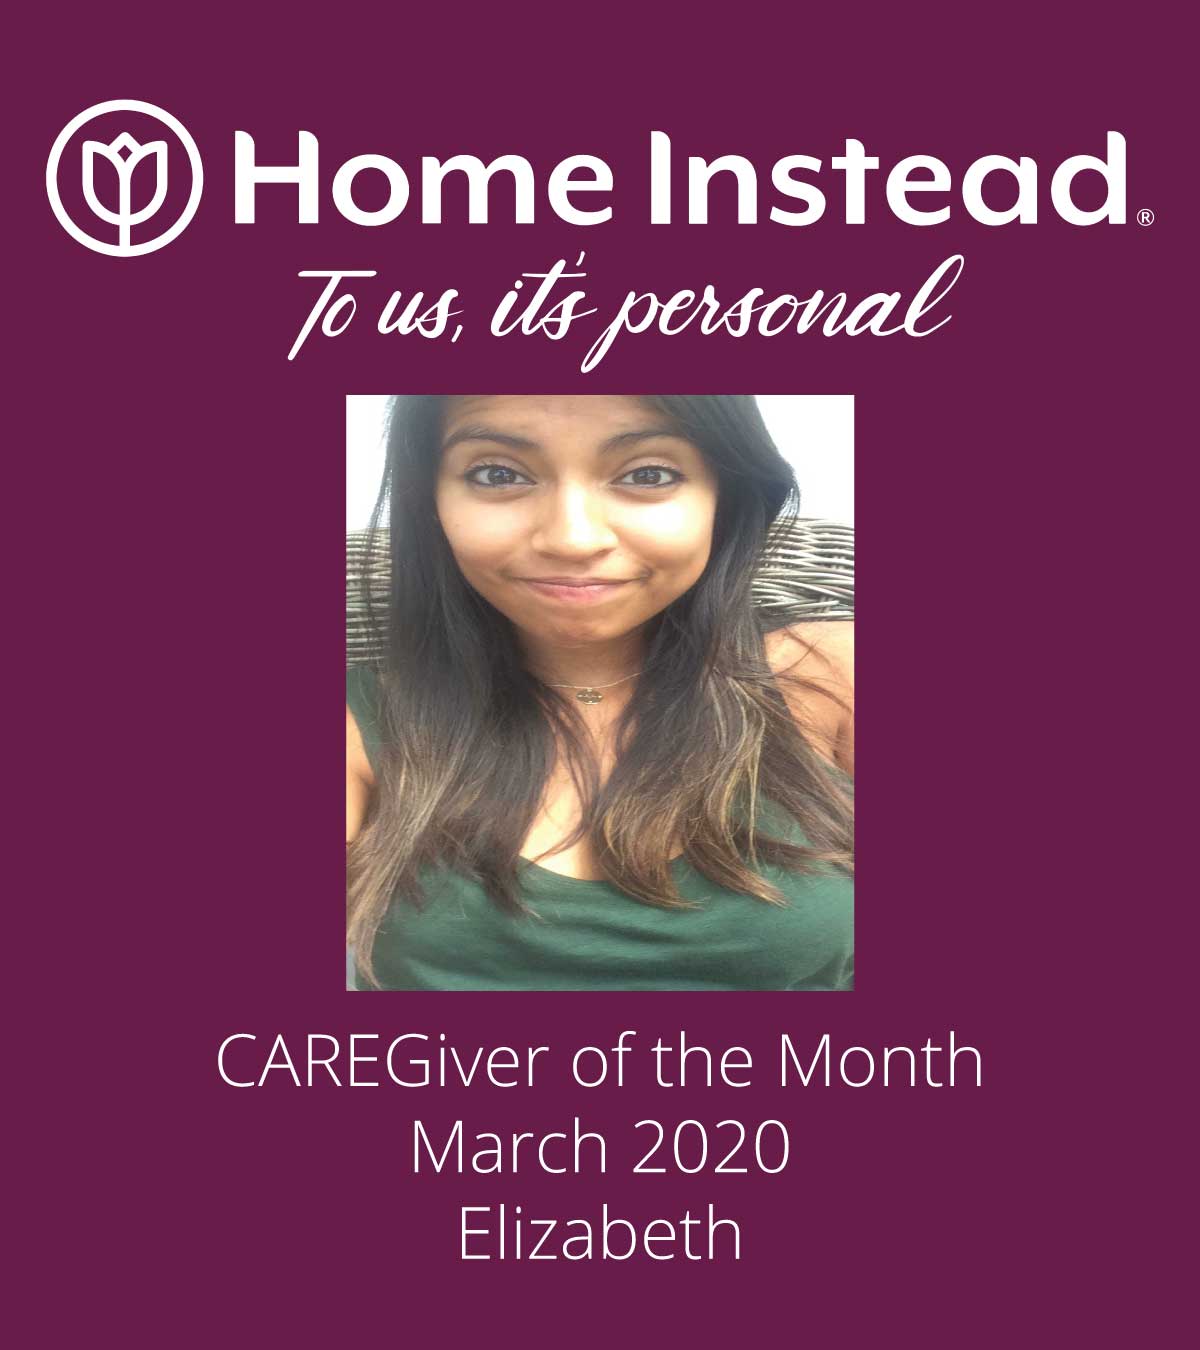 Home Instead Caregiver of the Month Elizabeth